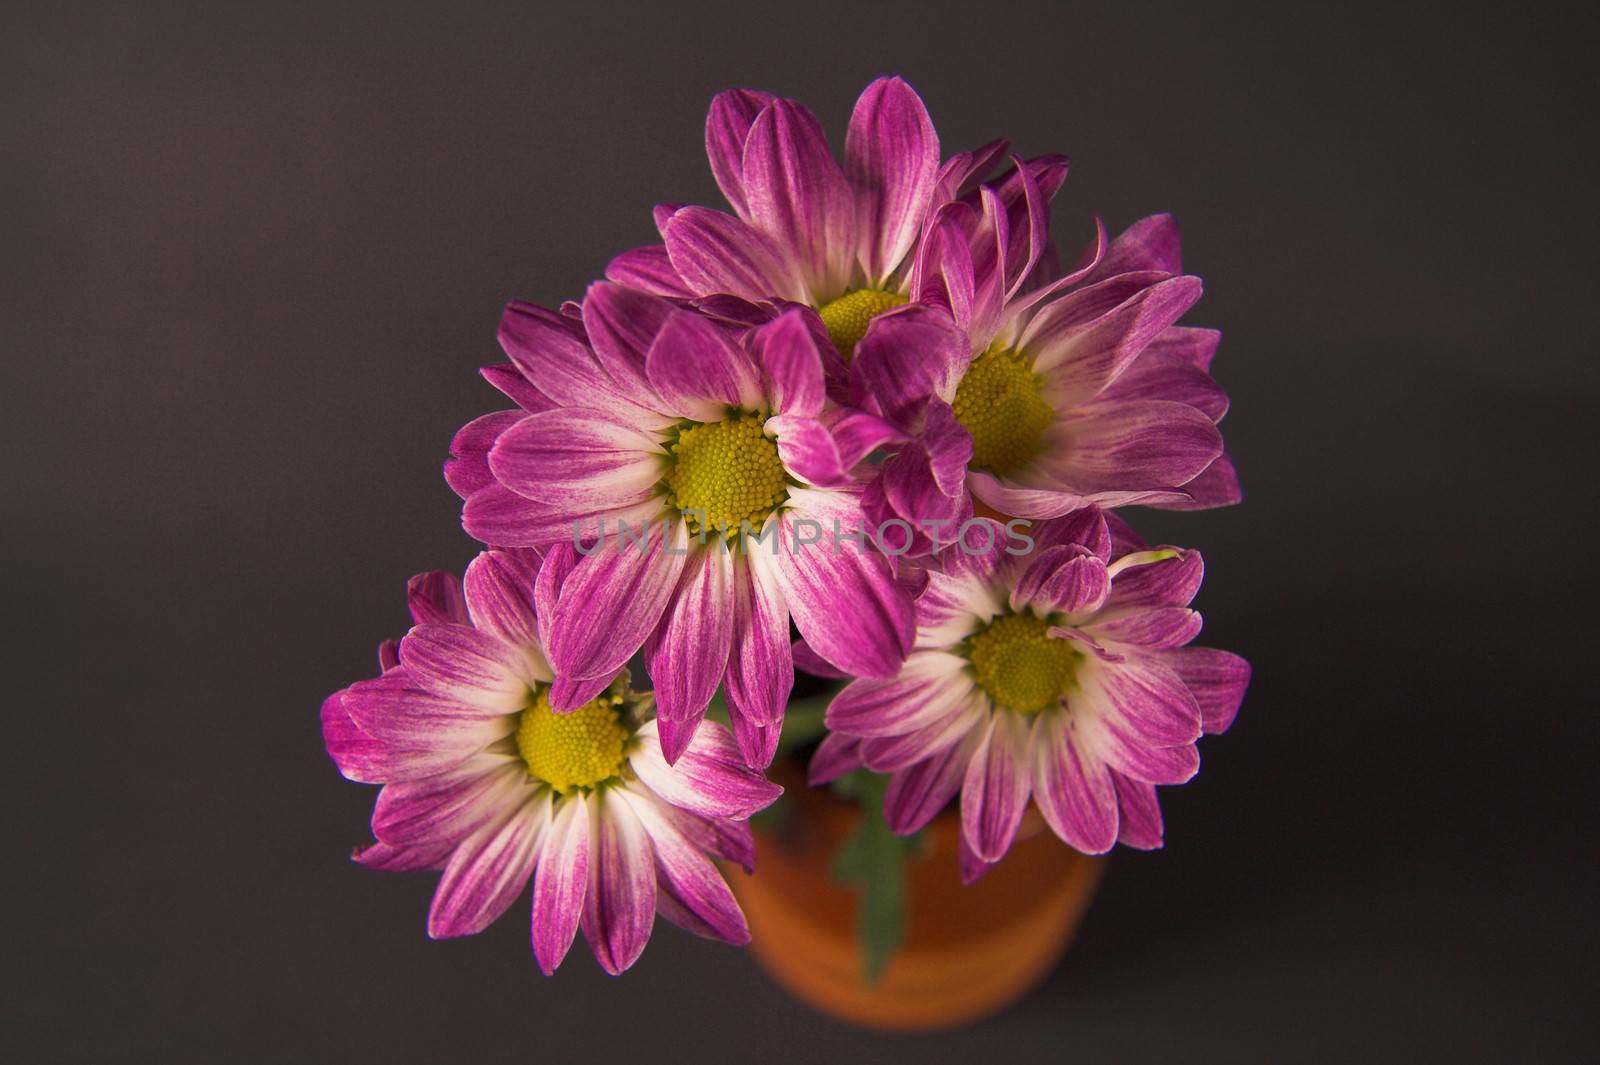 daisy flowers by CelsoDiniz